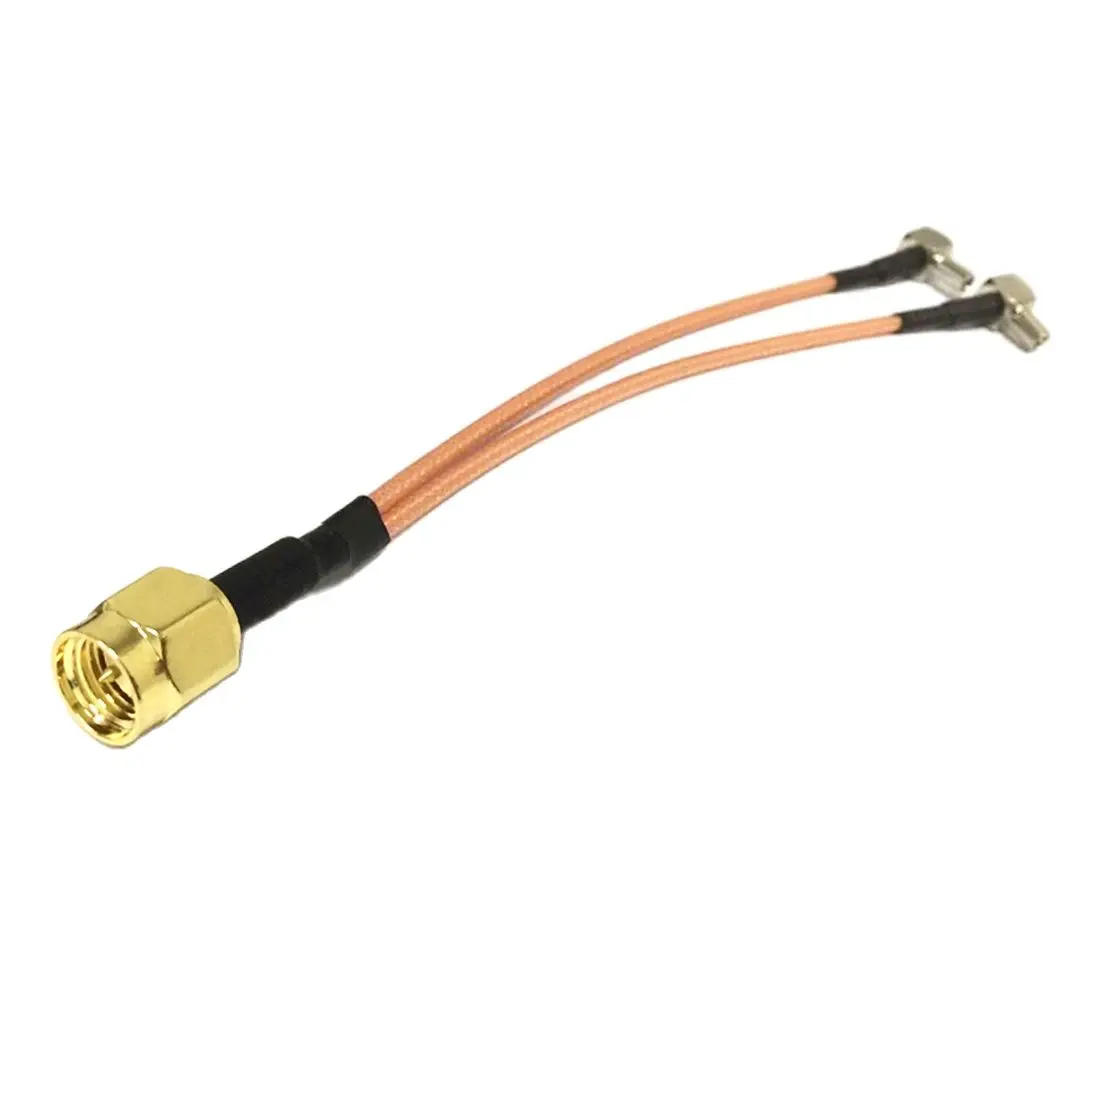 1 шт. коаксиальный кабель 15 см с SMA разъемом на 2X TS9 для модема Huawei e5332 e5776 e5372 |